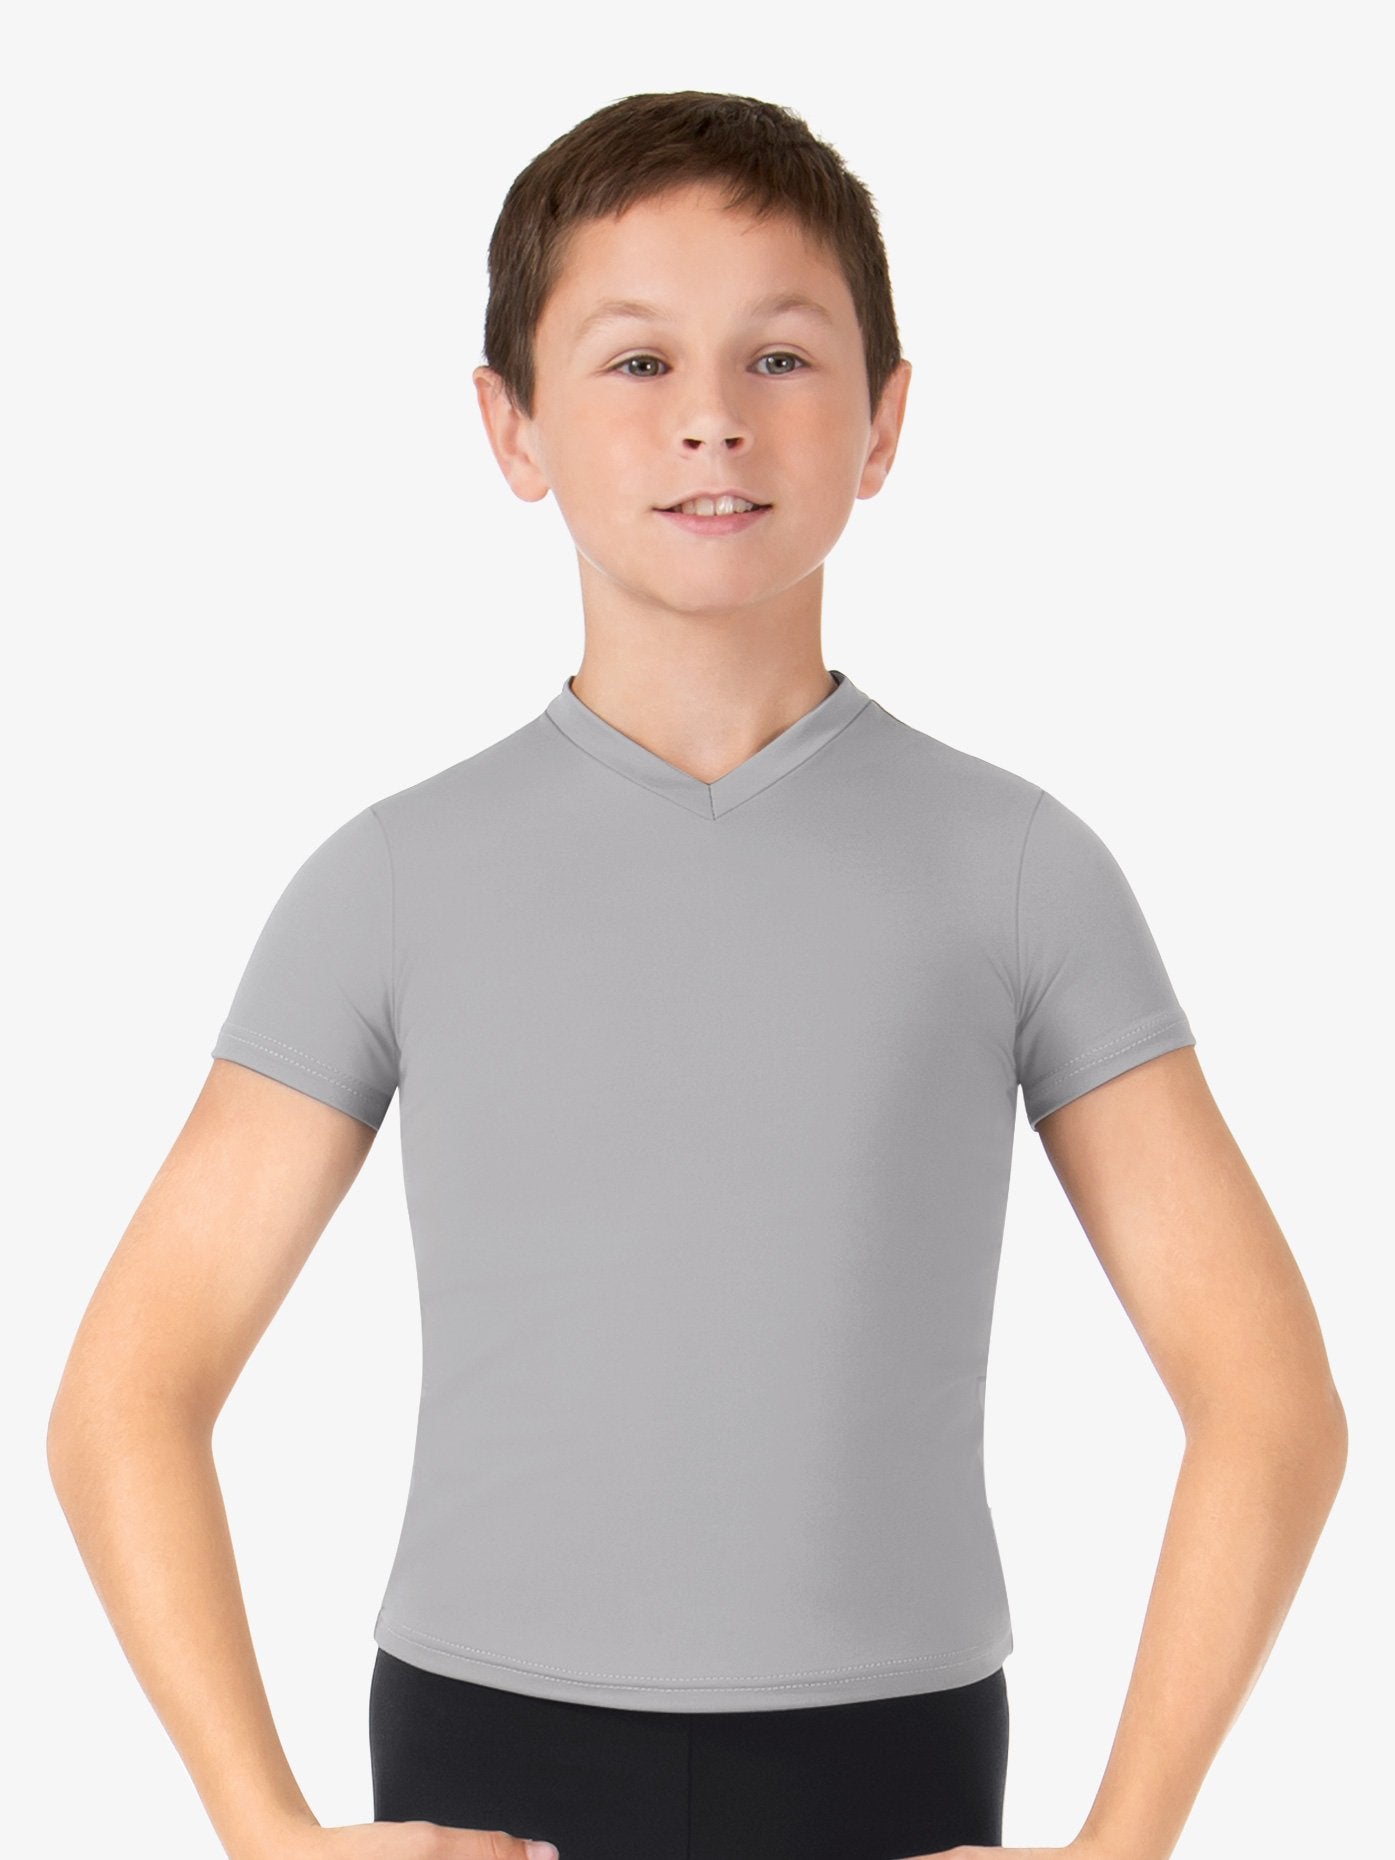 Boys 'Pasha' V-Neck Dance T-Shirt: Stylish and comfortable shirt for young male dancers